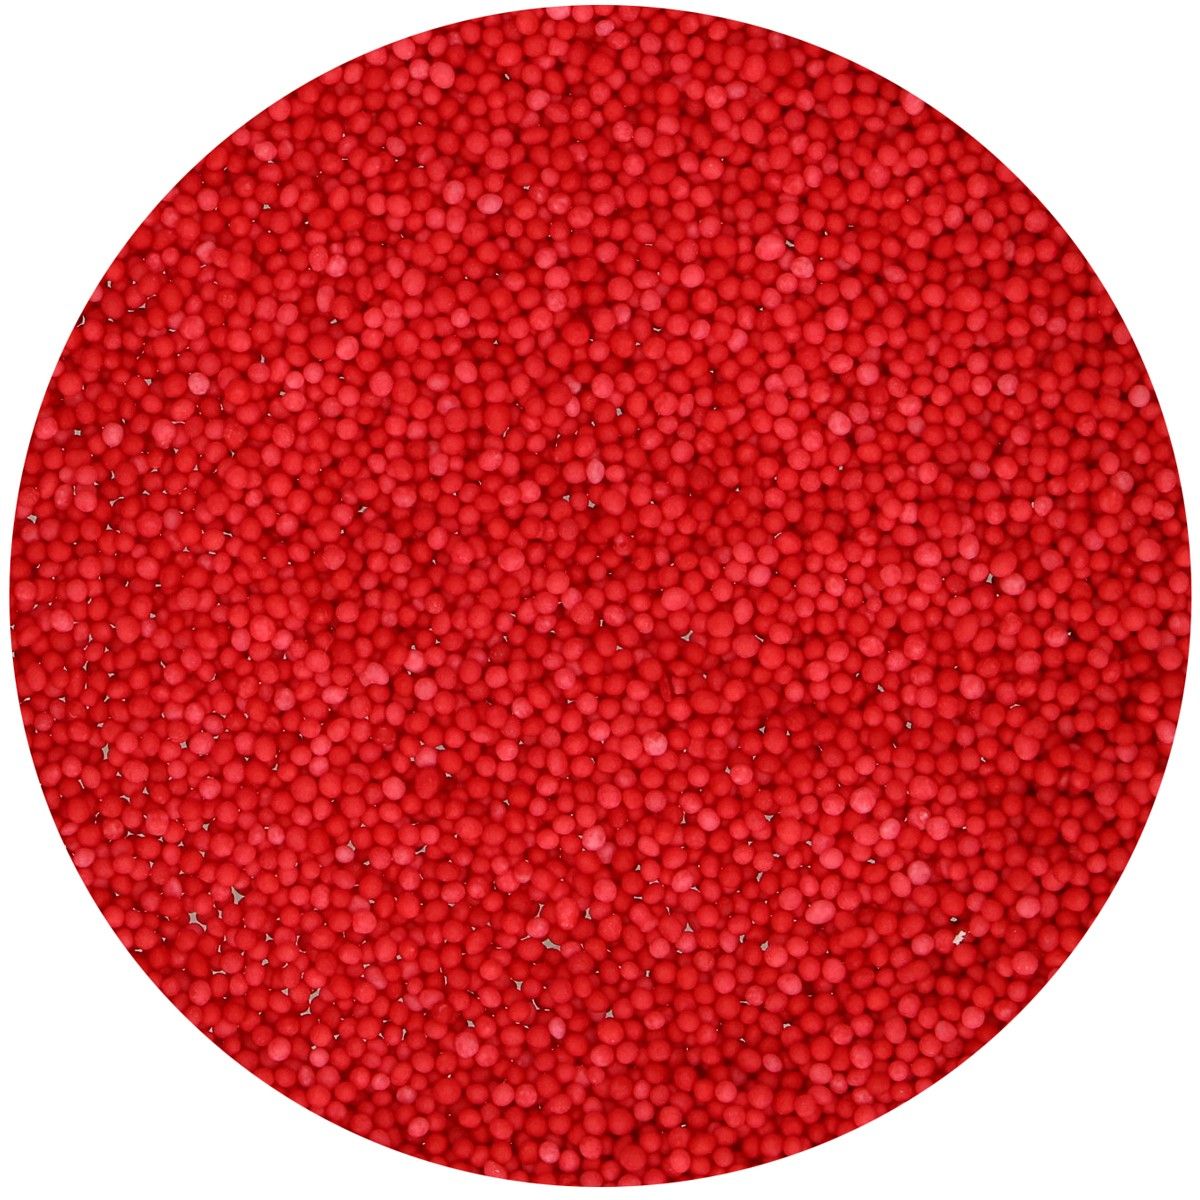 Imagen de producto: Non pareils rojo, 80 g - Funcakes